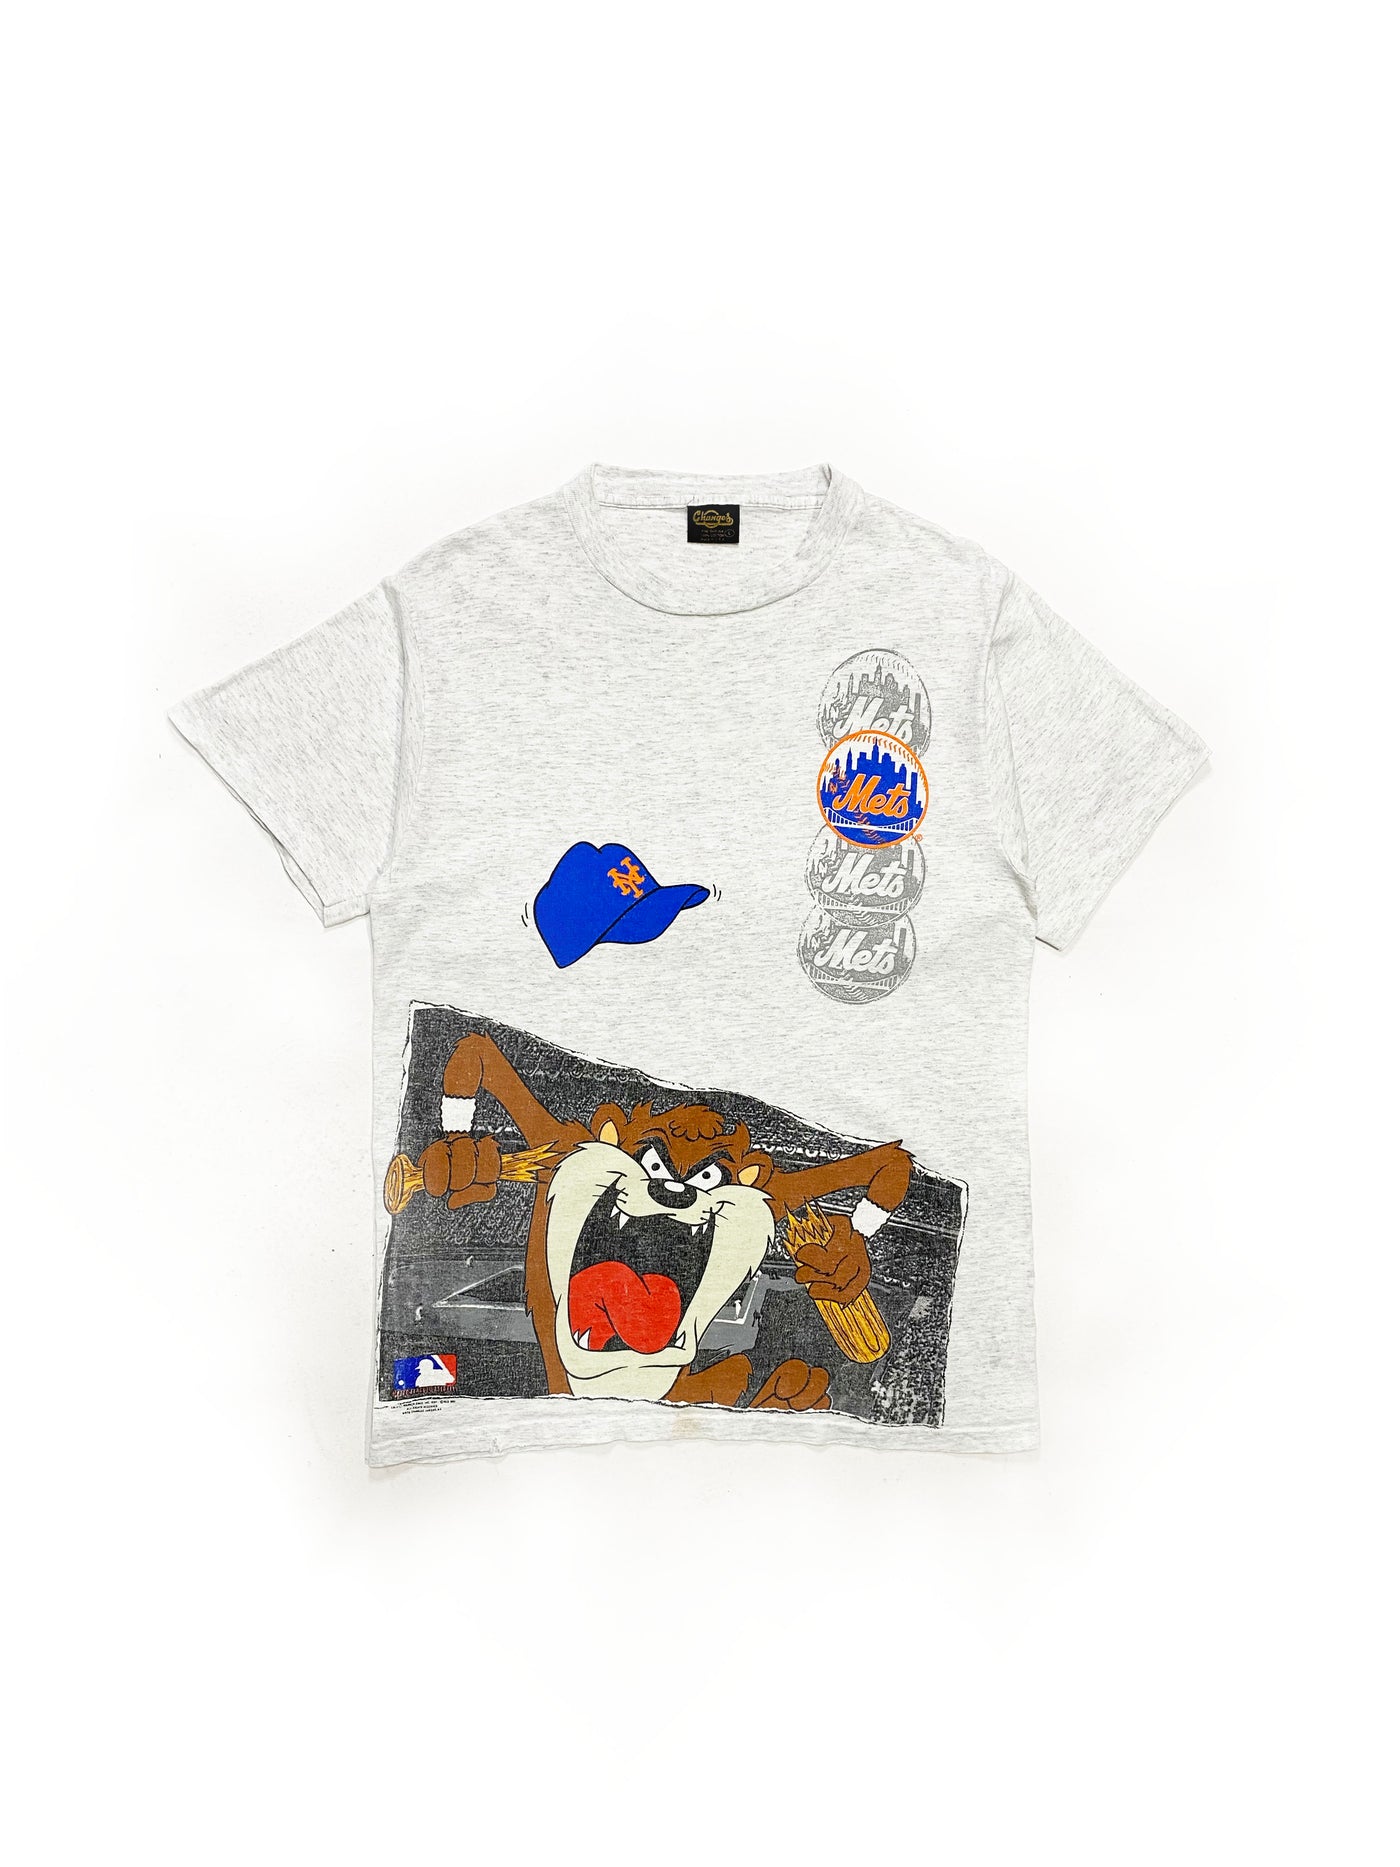 Vintage 1991 New York Mets Taz T-Shirt